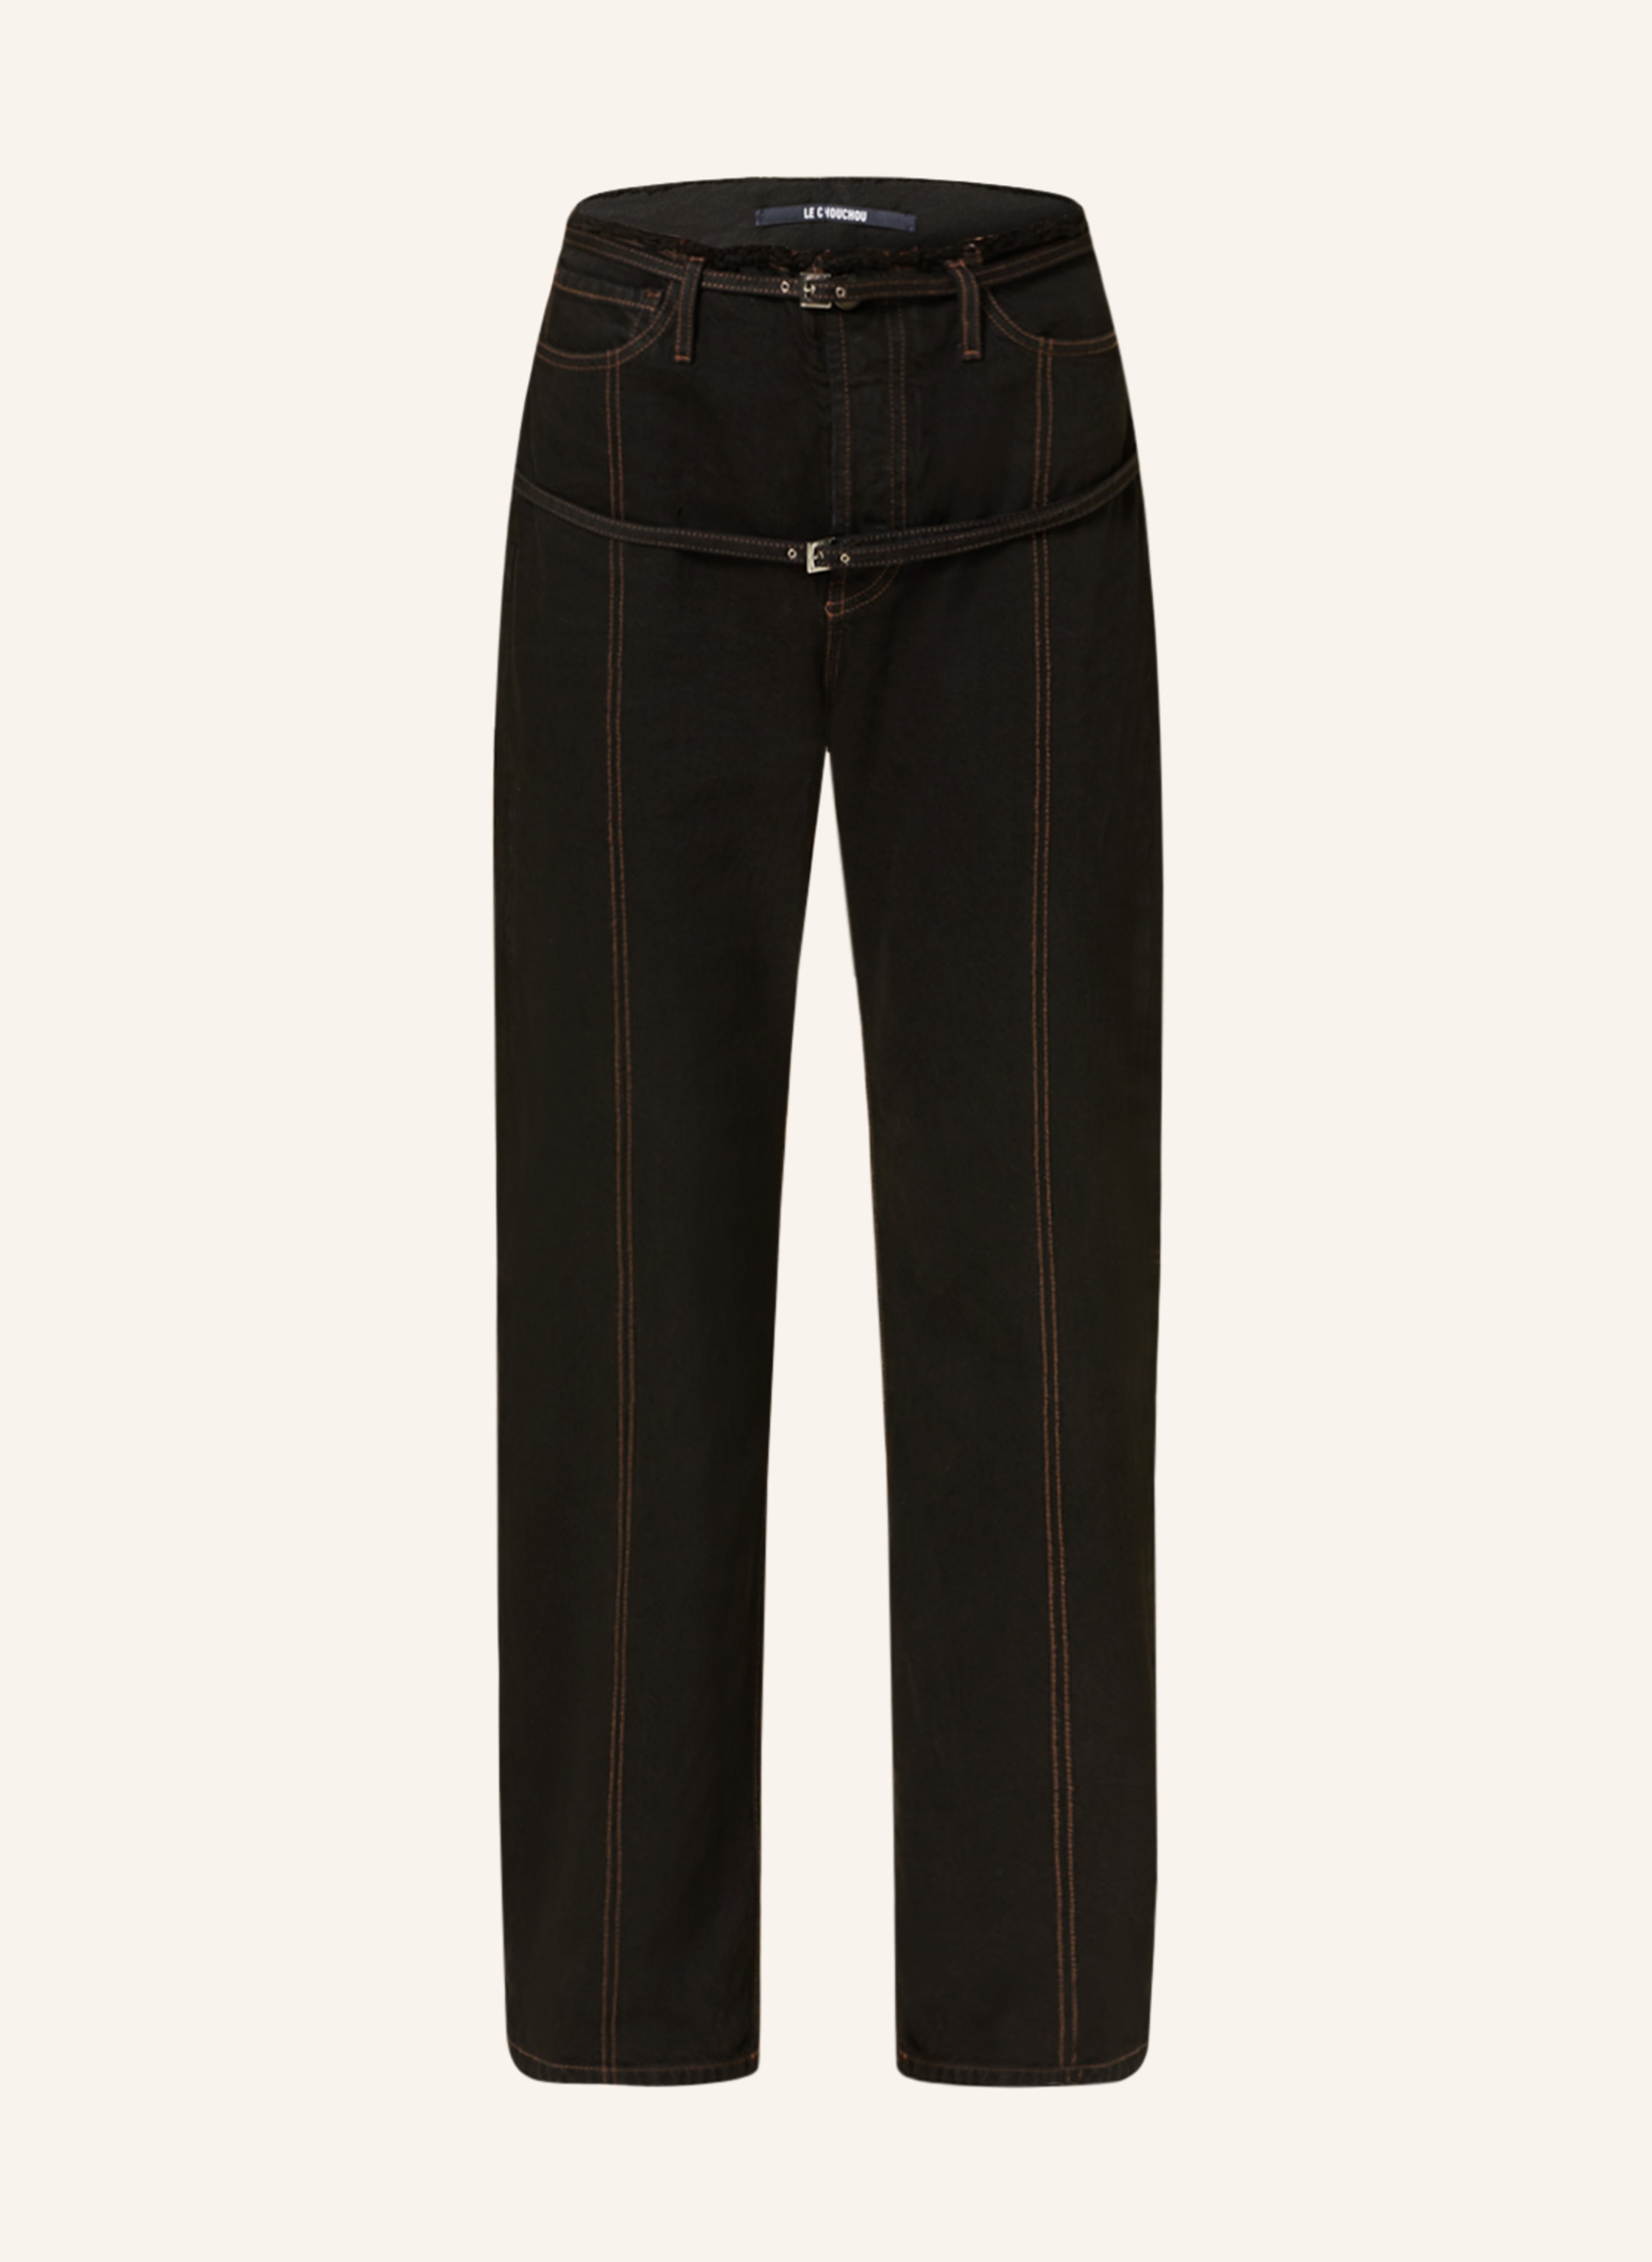 JACQUEMUS Straight jeans LE DE NIMES CARACO in black/ dark brown